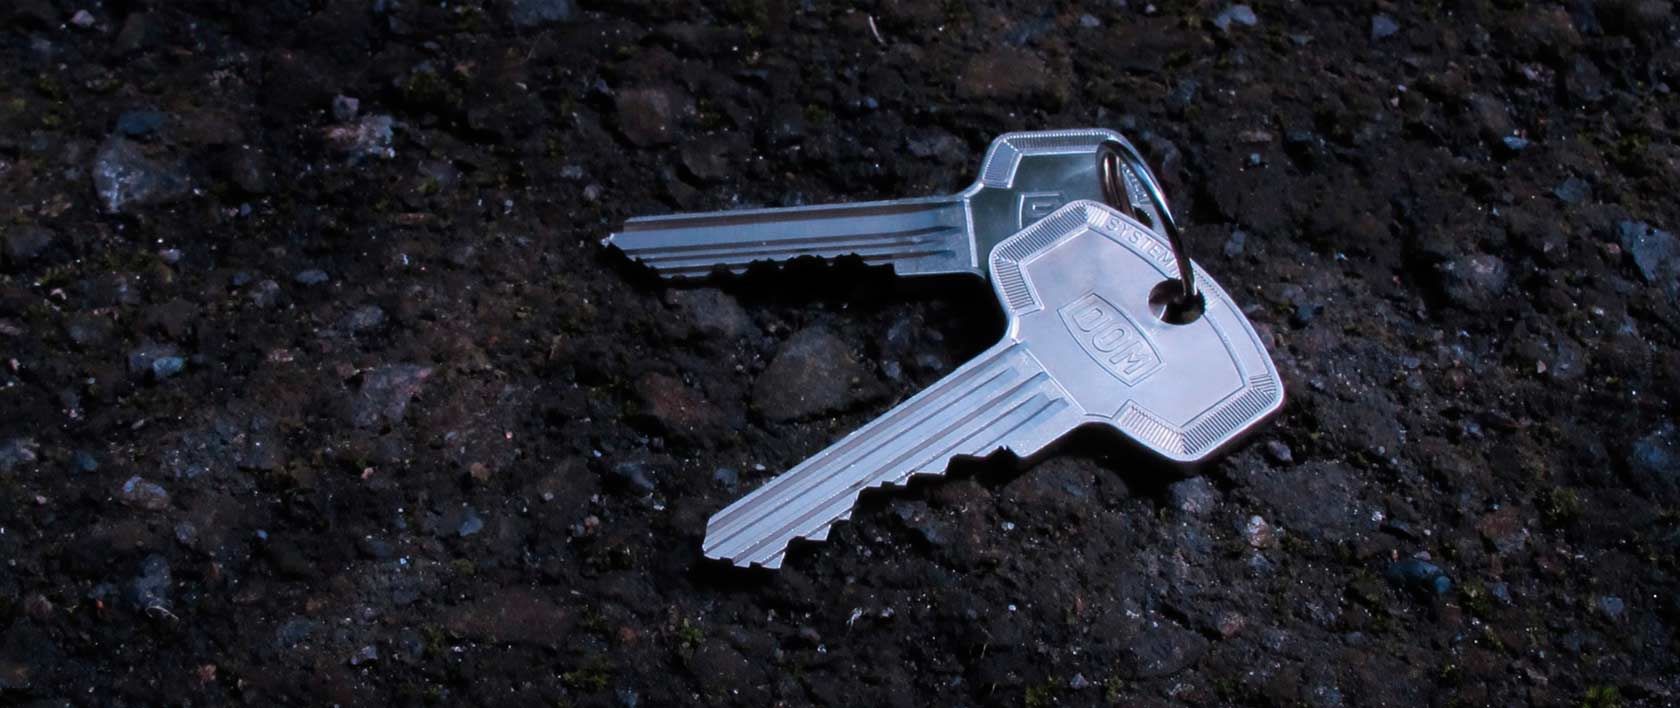 keys on the ground